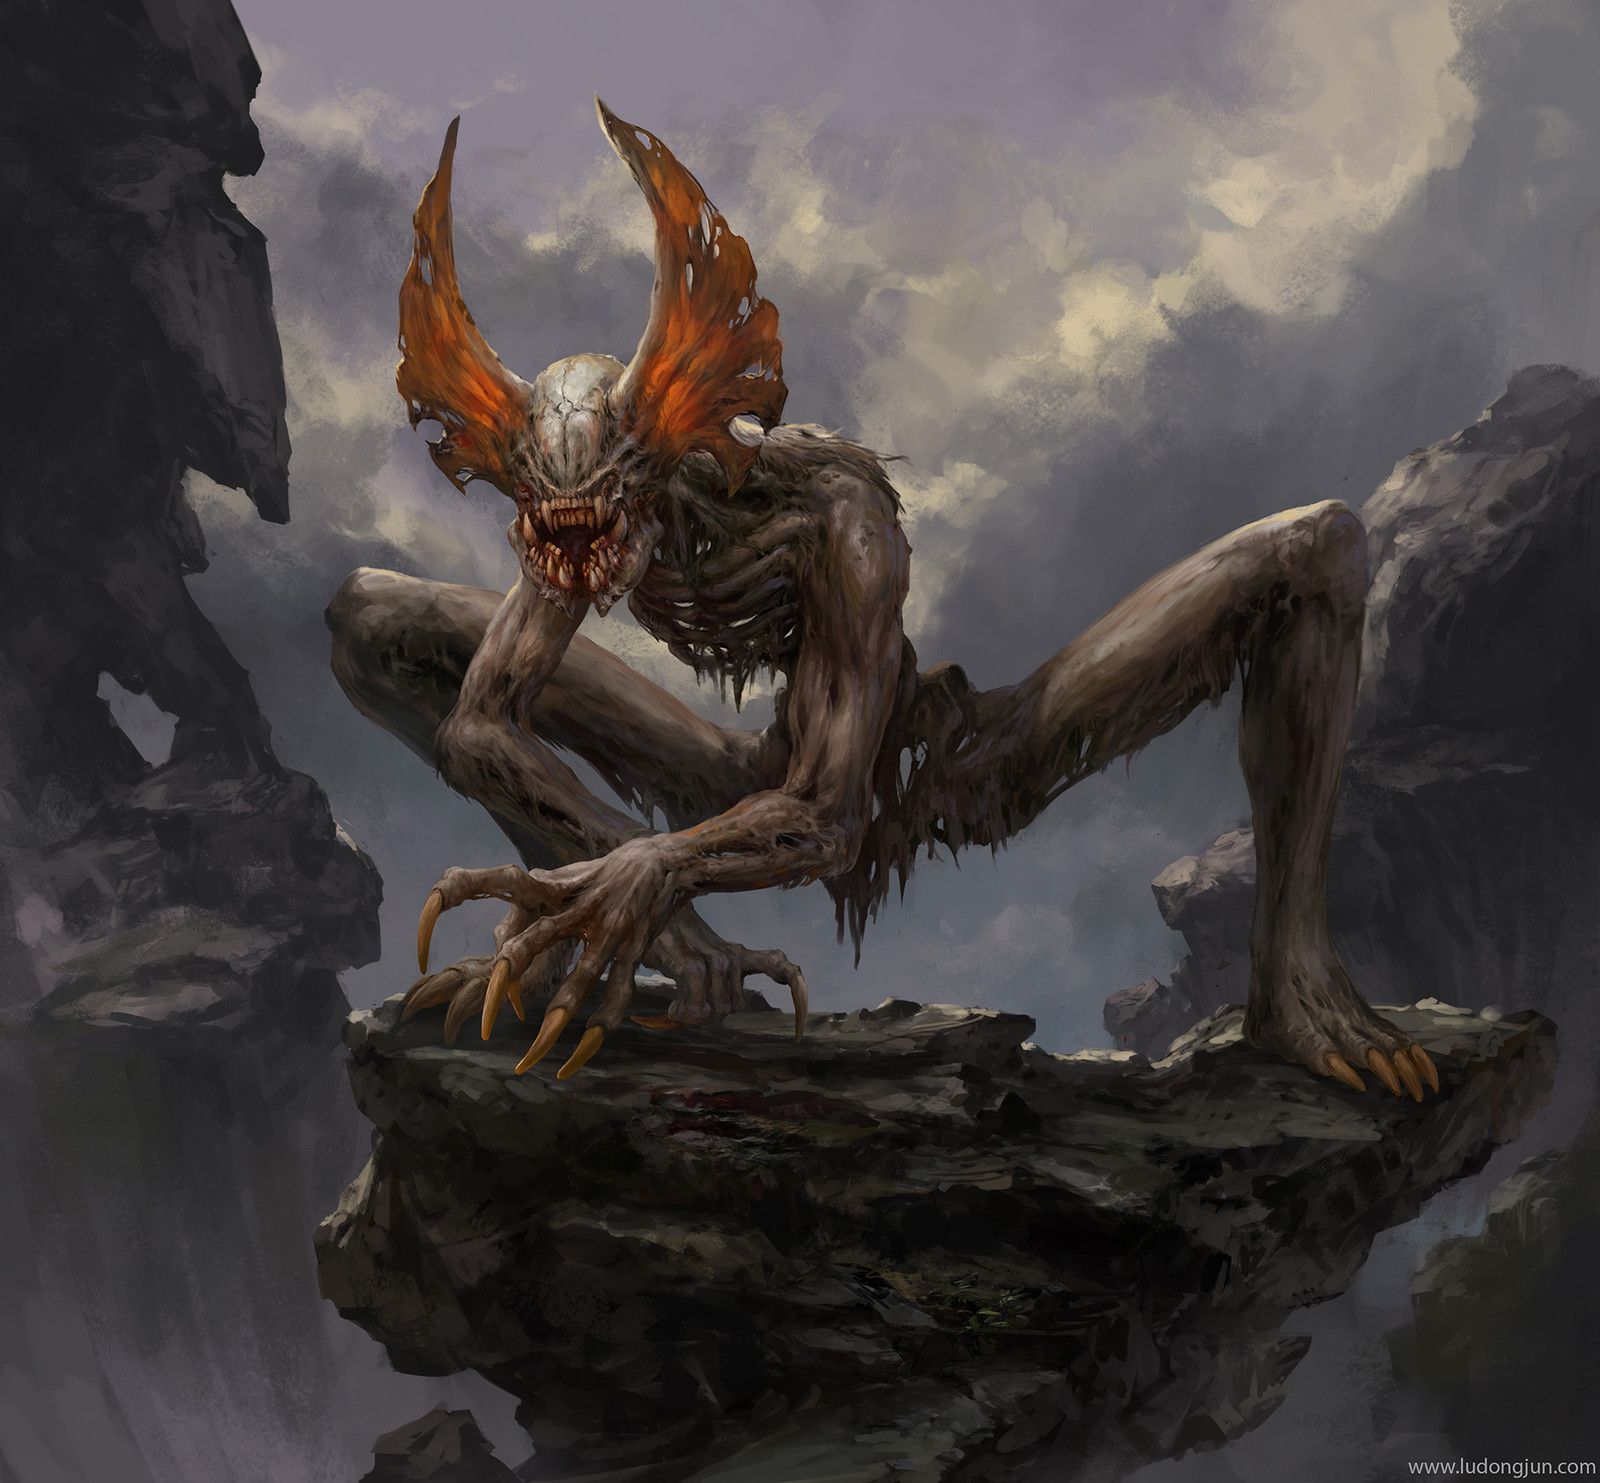 Undead Cave Monster | ConceptArt | Pinterest | Creatures, Monsters ...